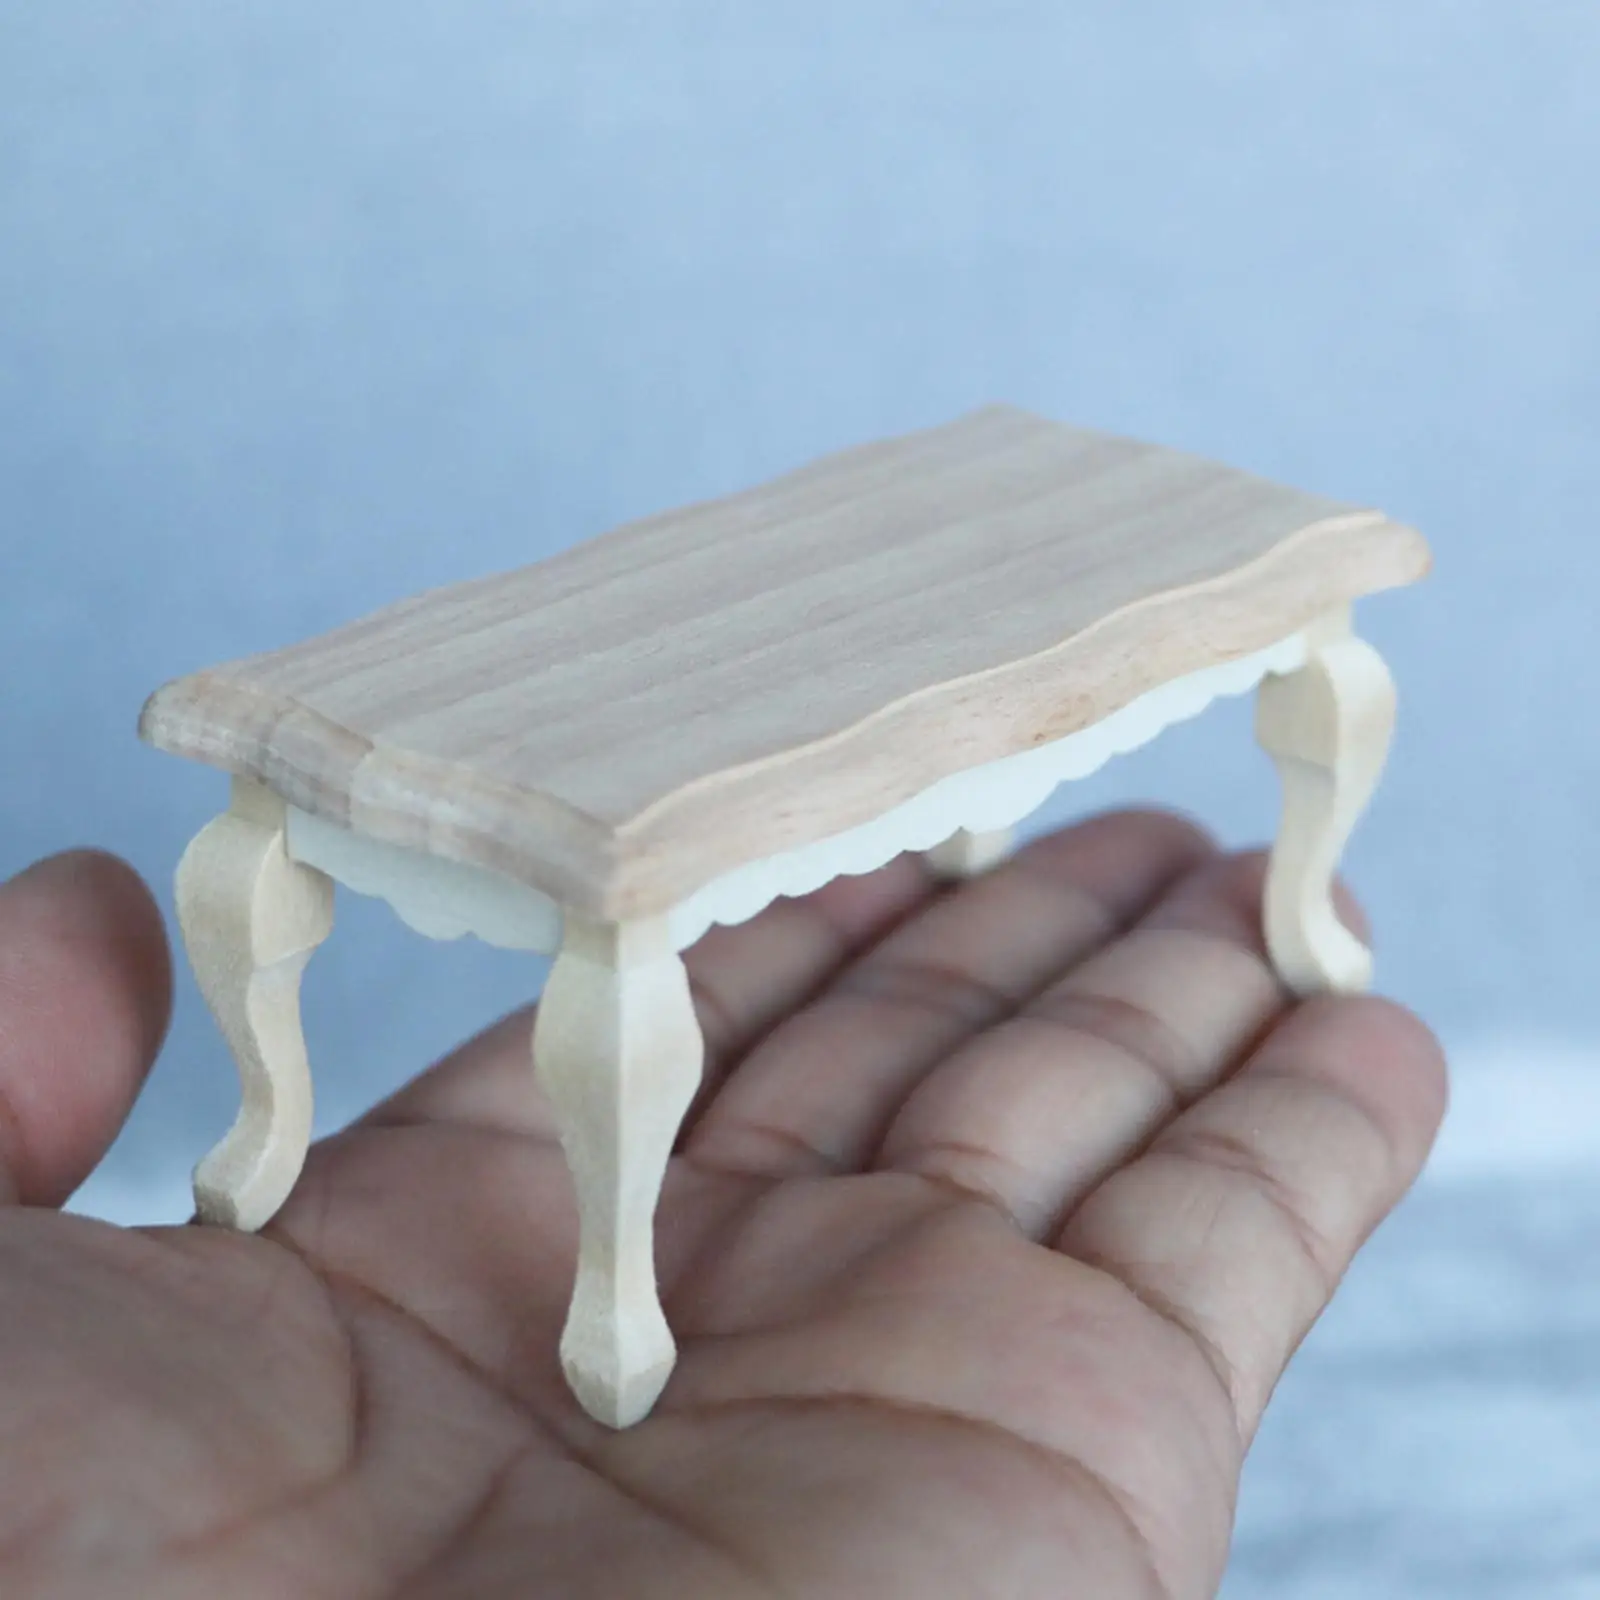 1/12 Dollhouse Table Mini Coffee Table Doll House Decor Wood for Children